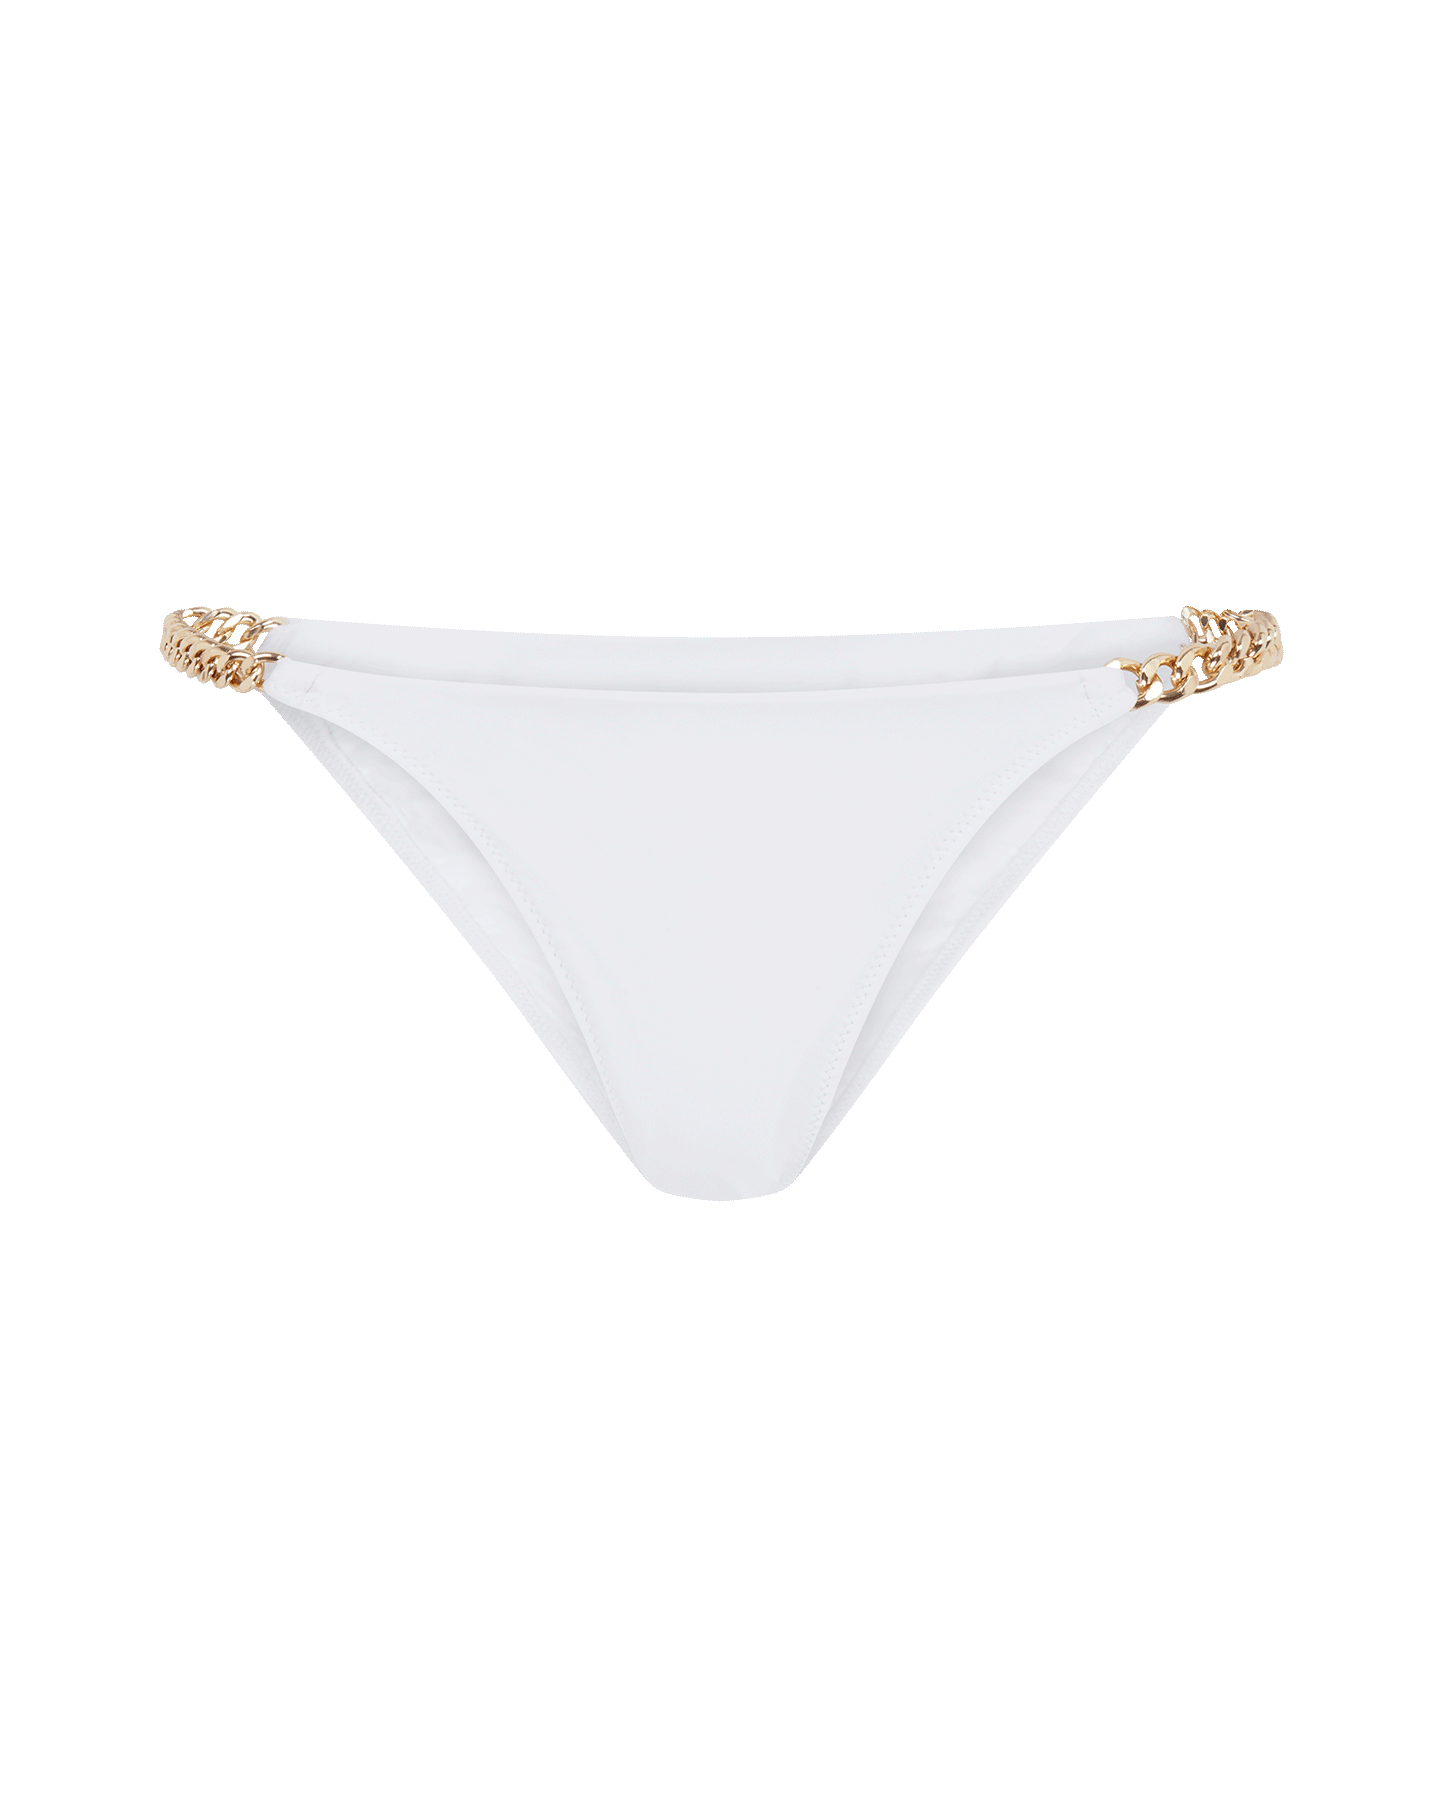 Trixy Bikini Bottom in White/Gold | By Agent Provocateur